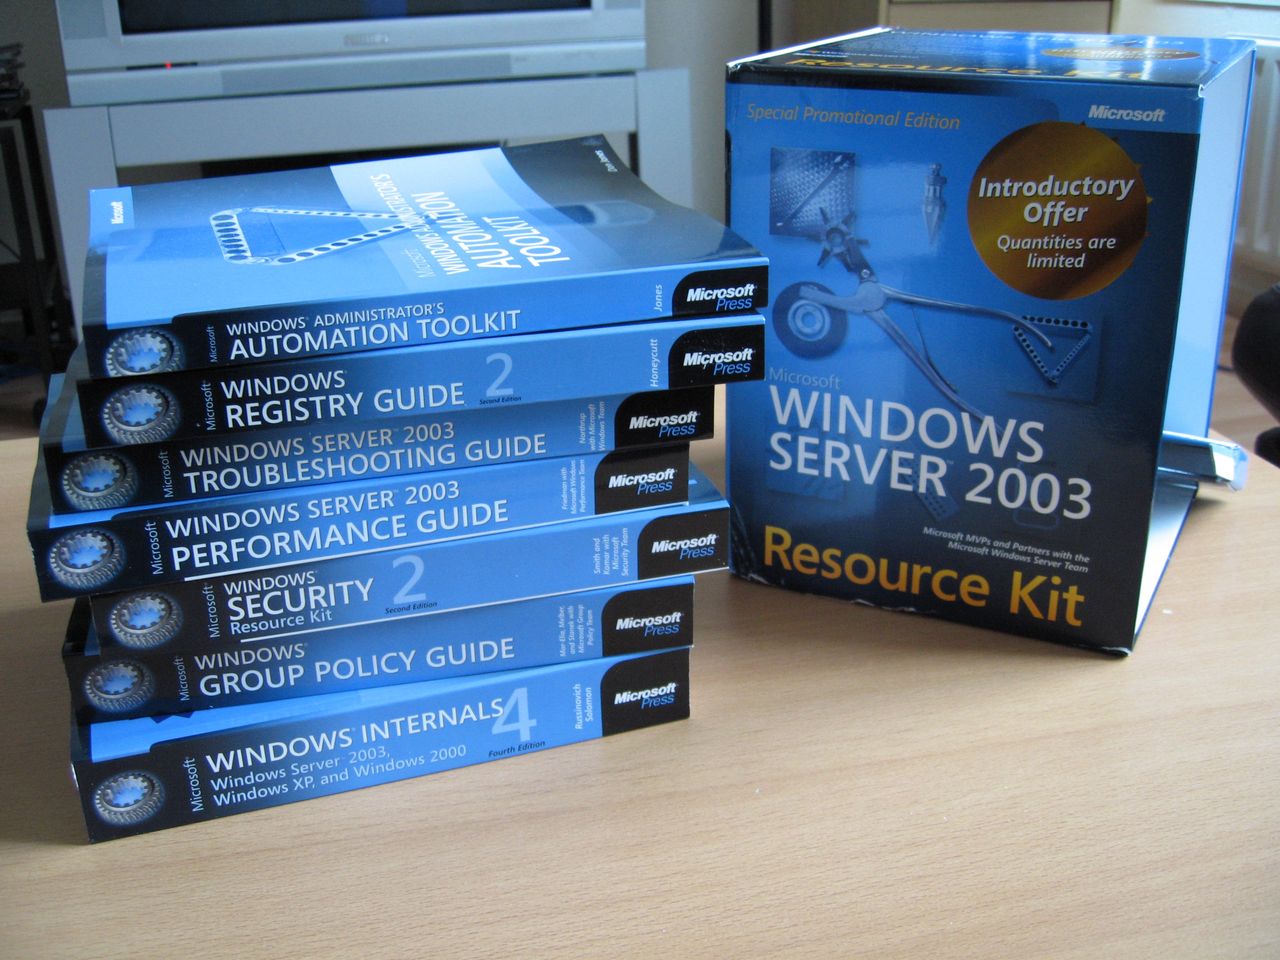 Windows Server 2003
